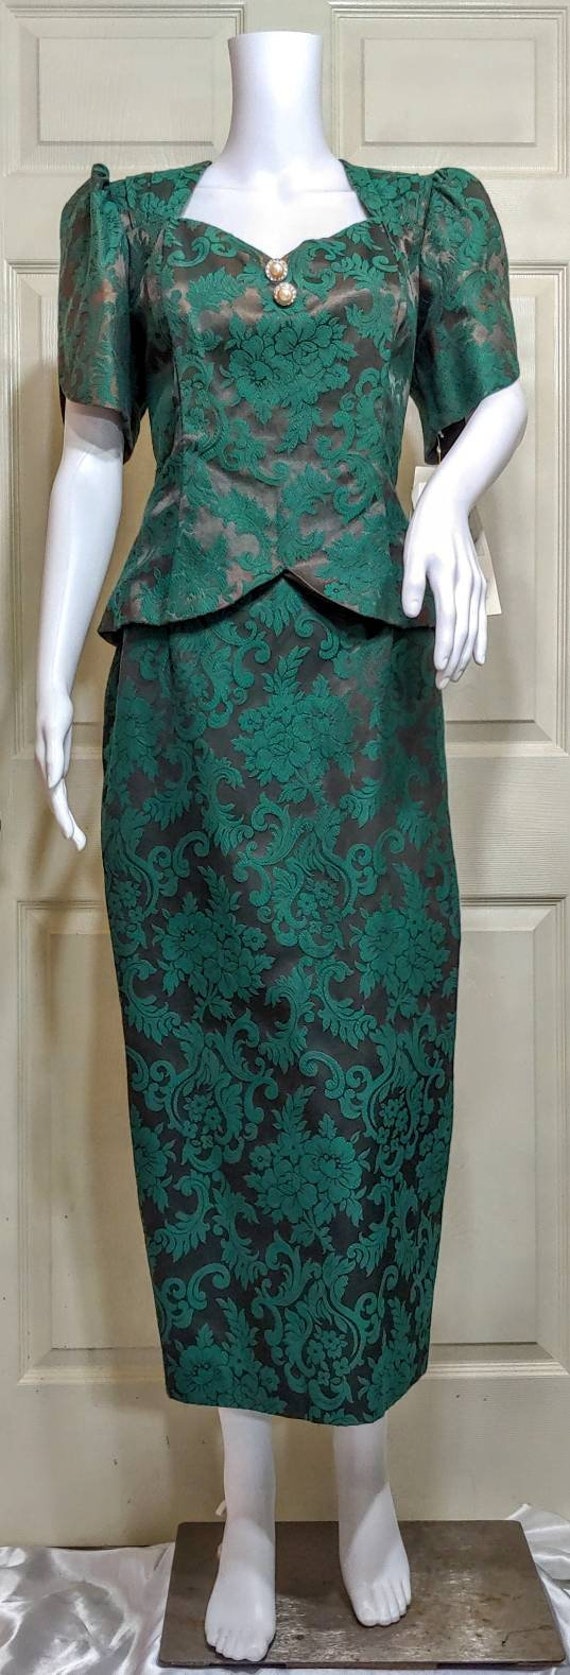 Vintage Jessica McClintock Dress - image 2